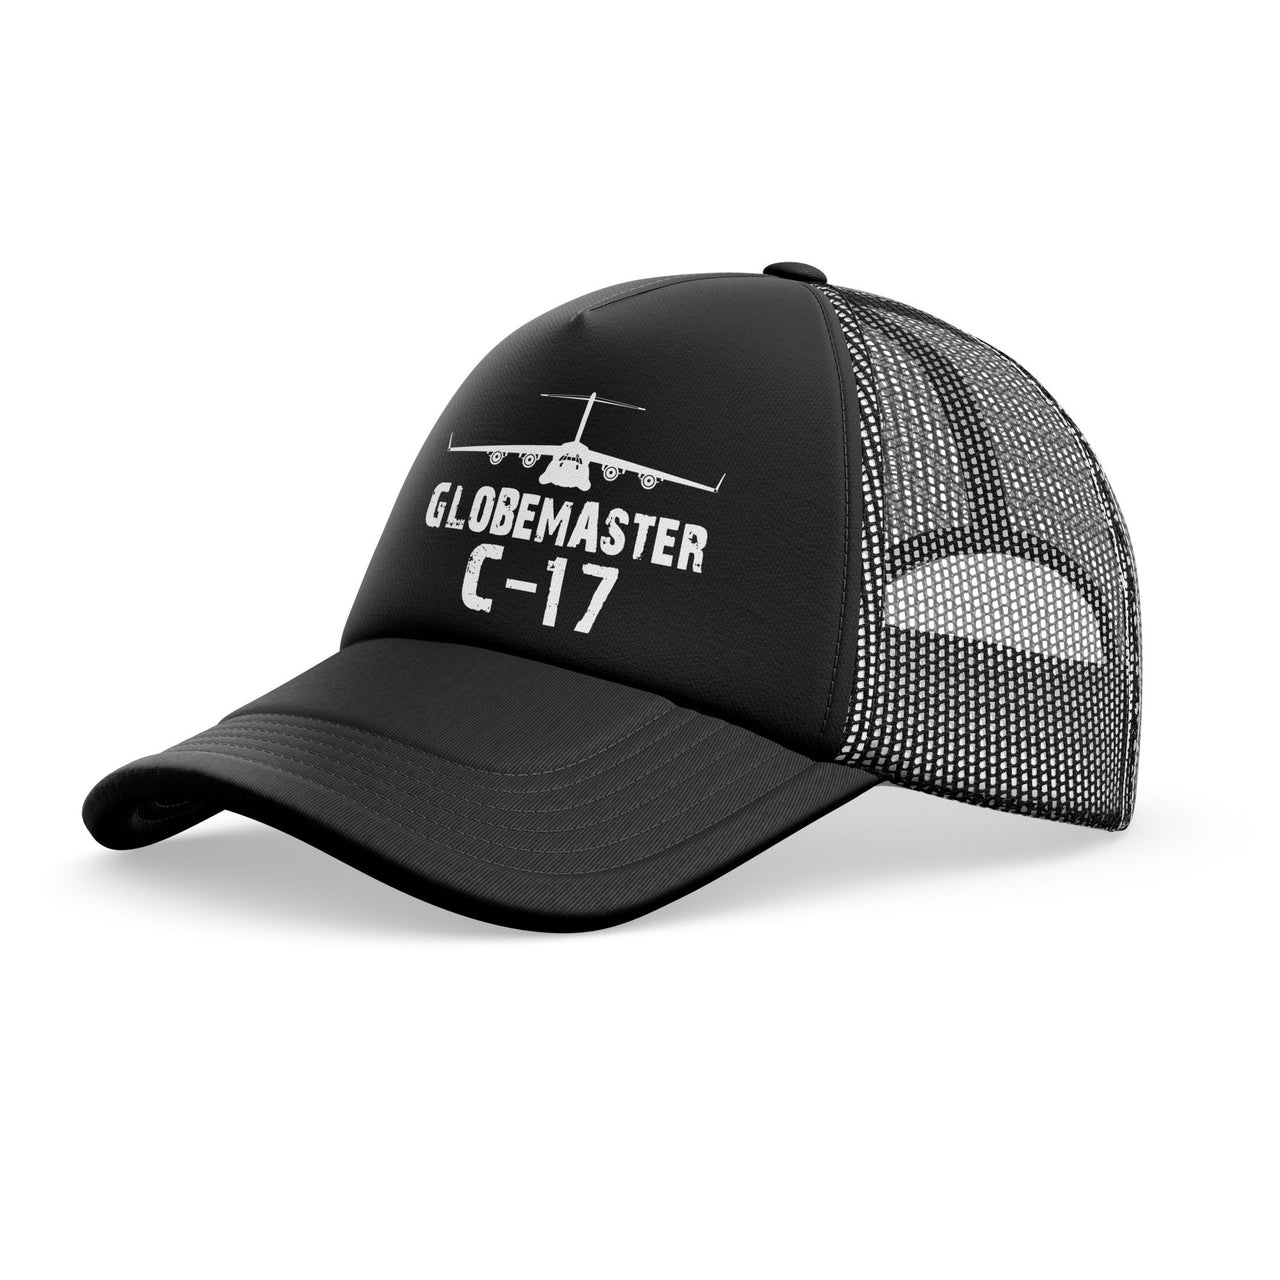 GlobeMaster C-17 & Plane Designed Trucker Caps & Hats